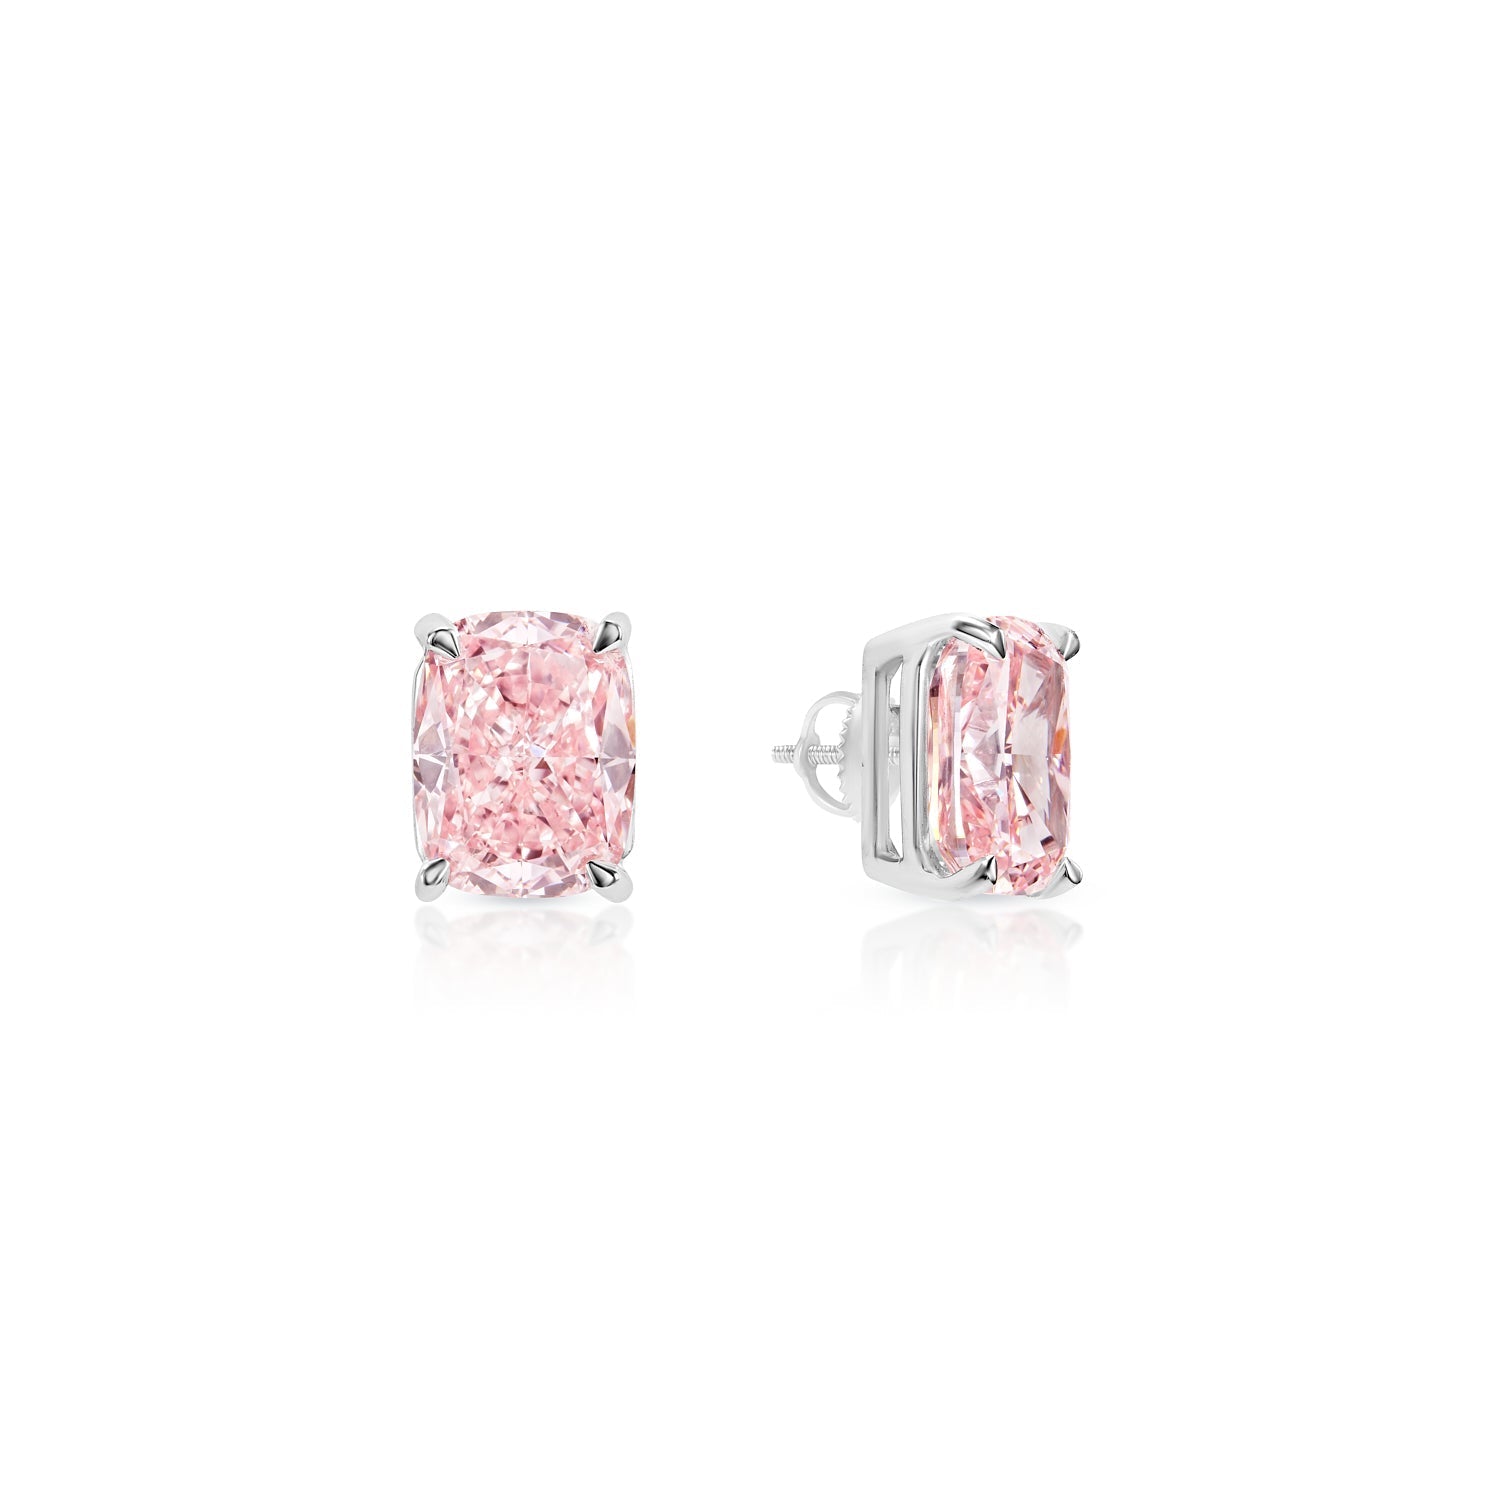 Haisley 5 Carat VVS1 Fancy Vivi Pink Diamond Stud Earrings in 14k White Gold Front and Side View